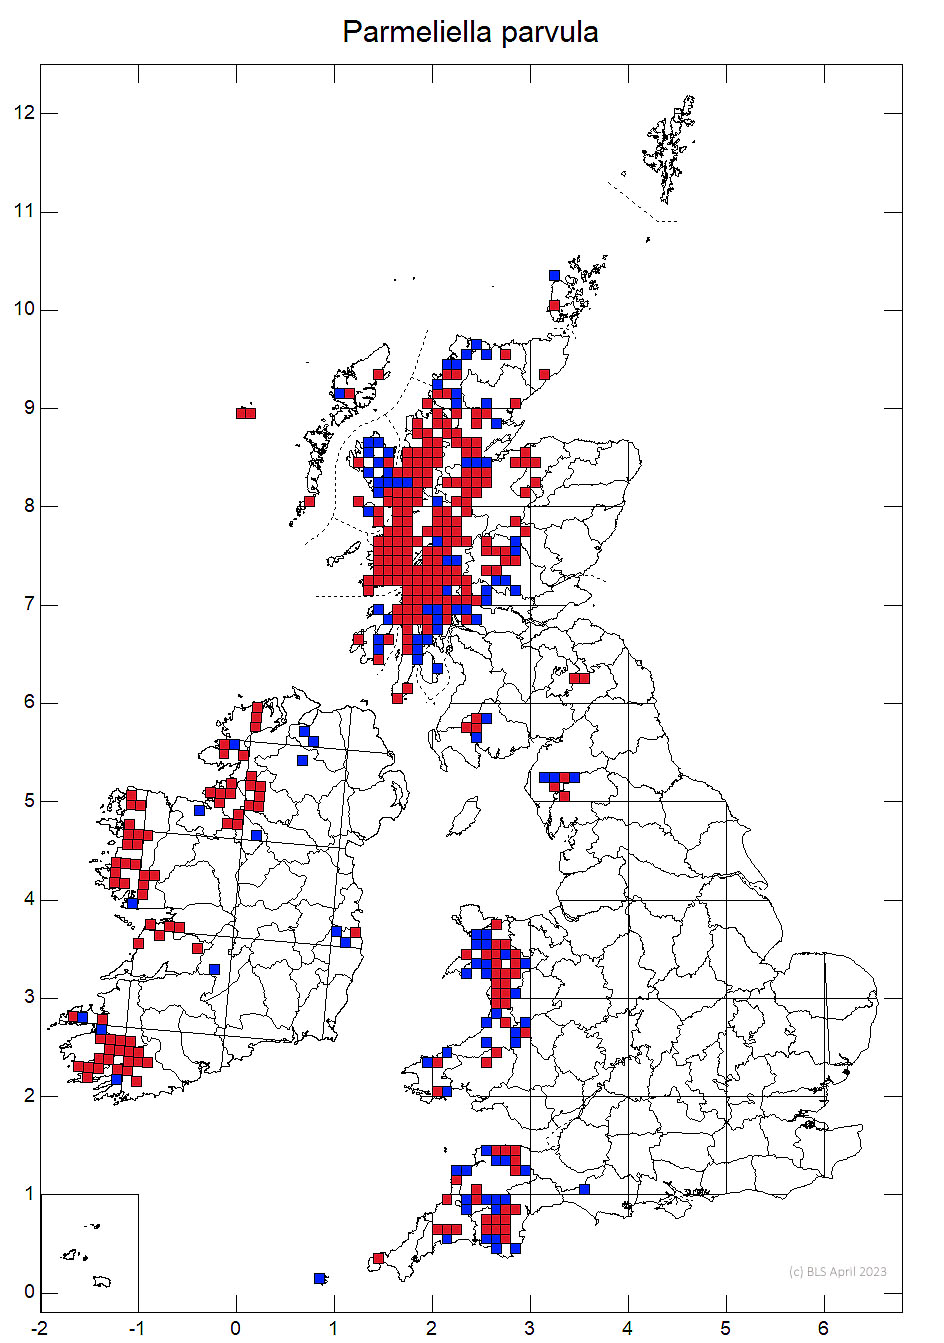 Parmeliella parvula 10km sq distribution map